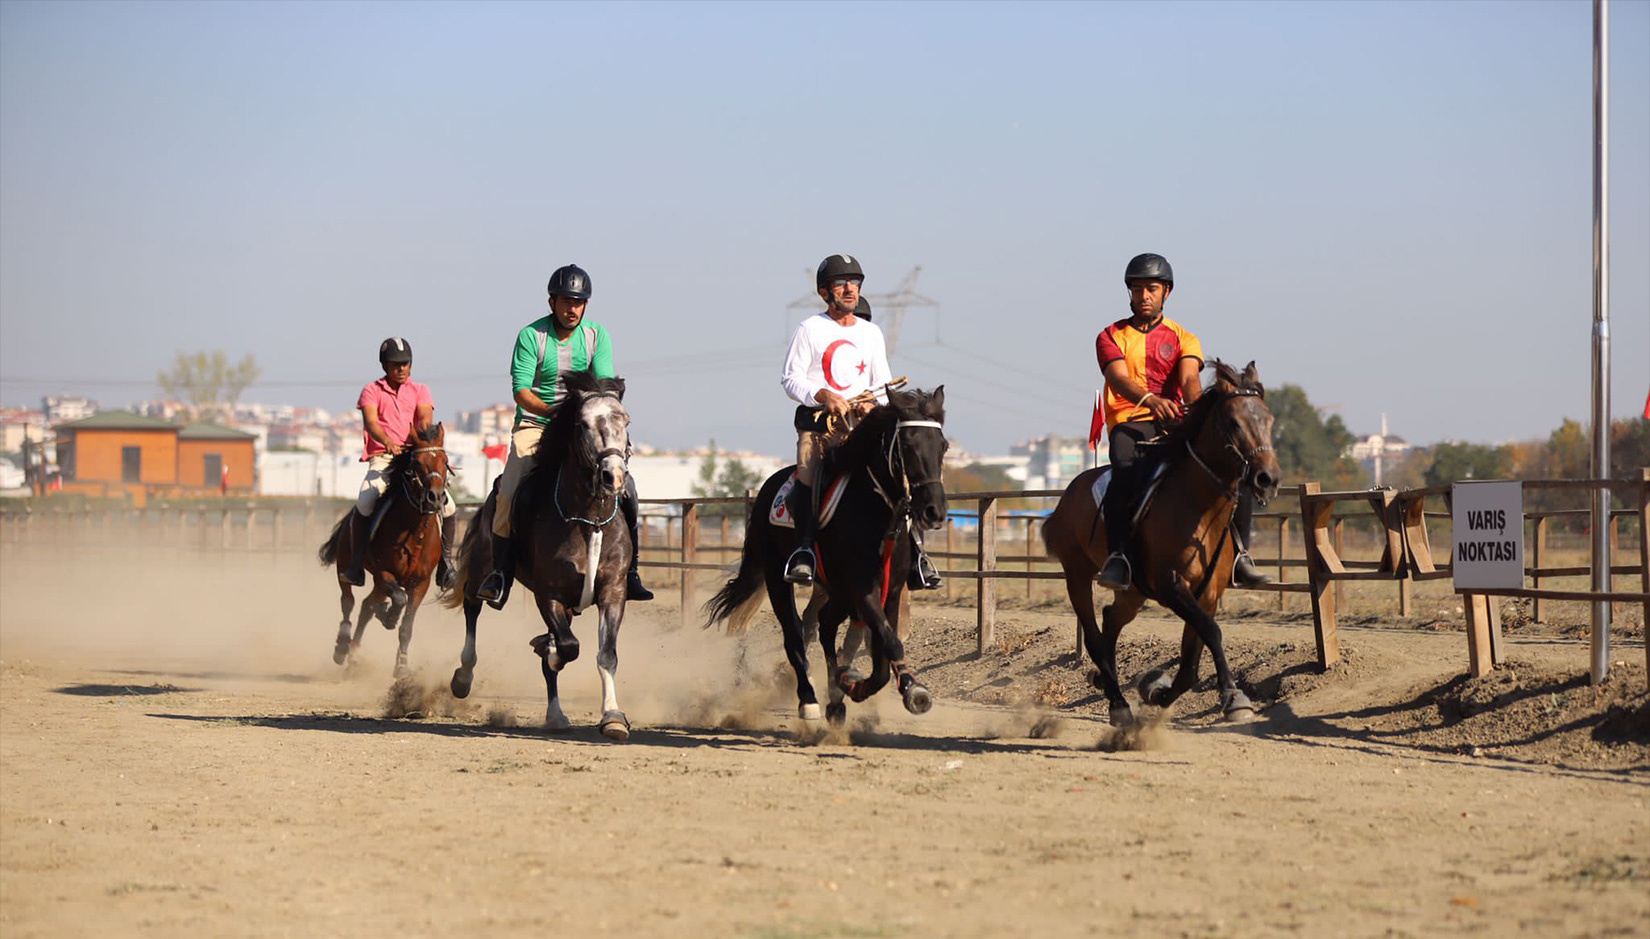 Equestrian Amble Championship of Türkiye Are Breathtaking